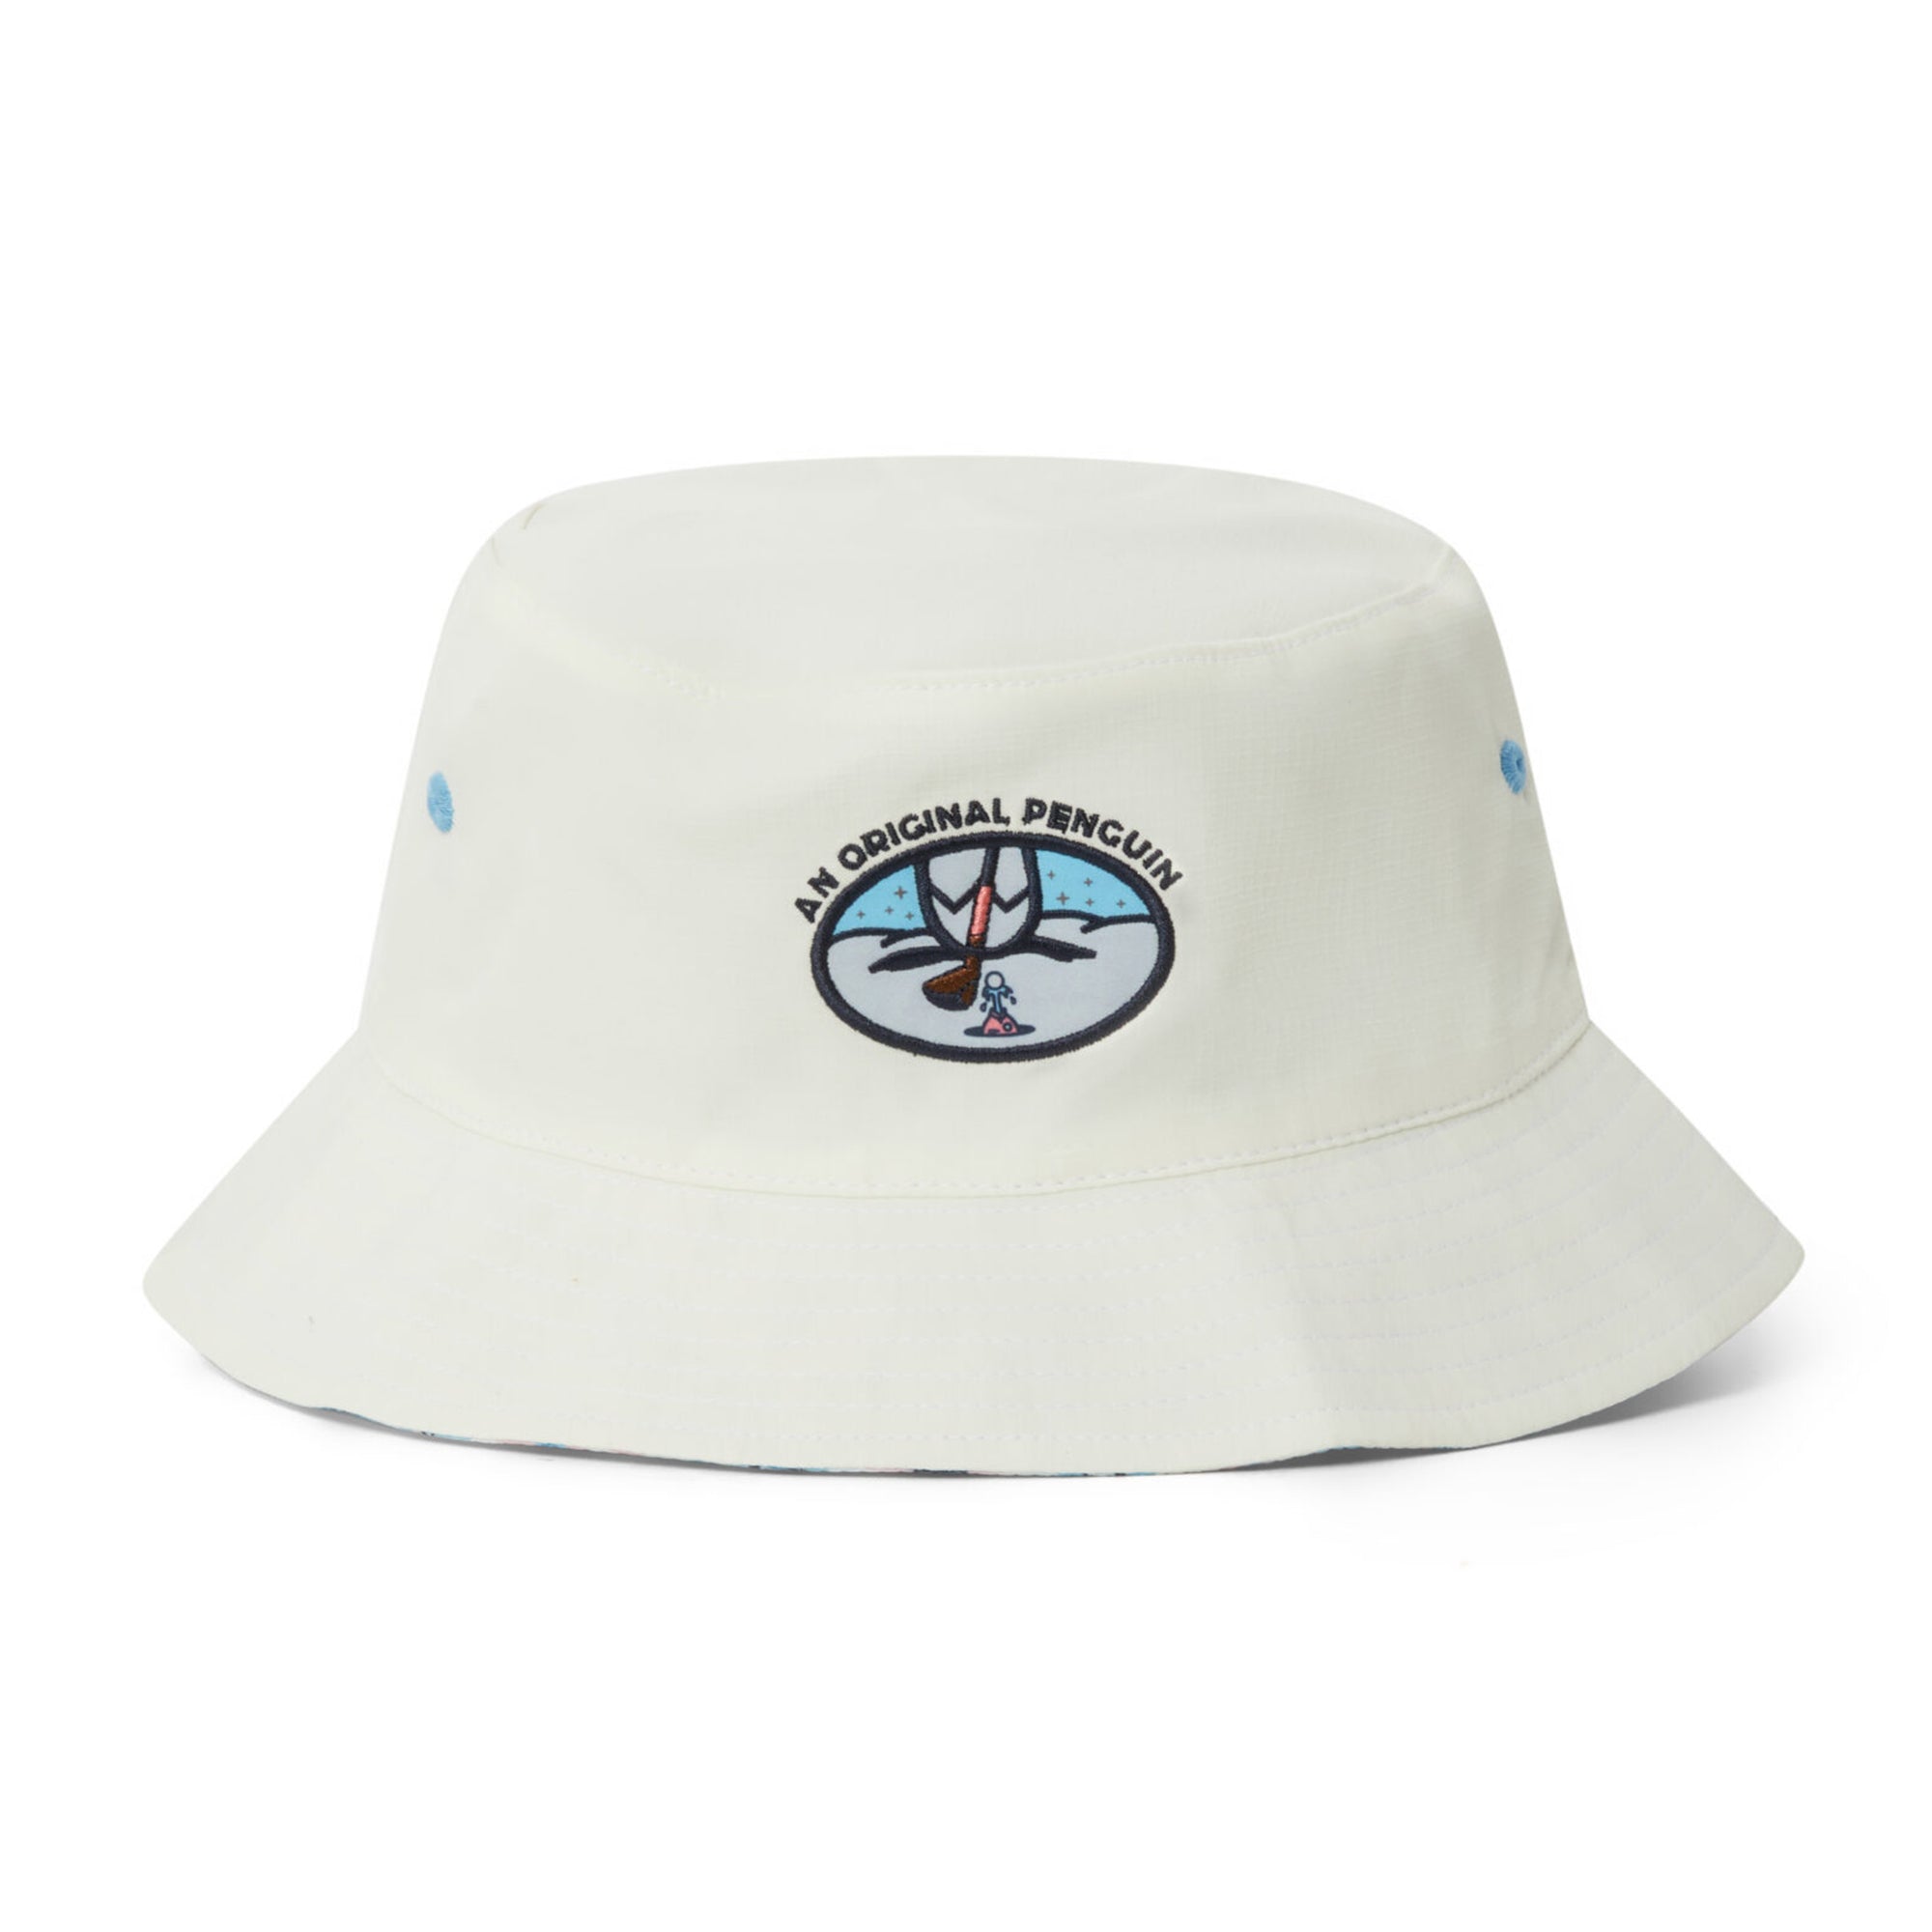 Original Penguin Golf Party Print Reversible Bucket Hat OGAFD007 Bright ...